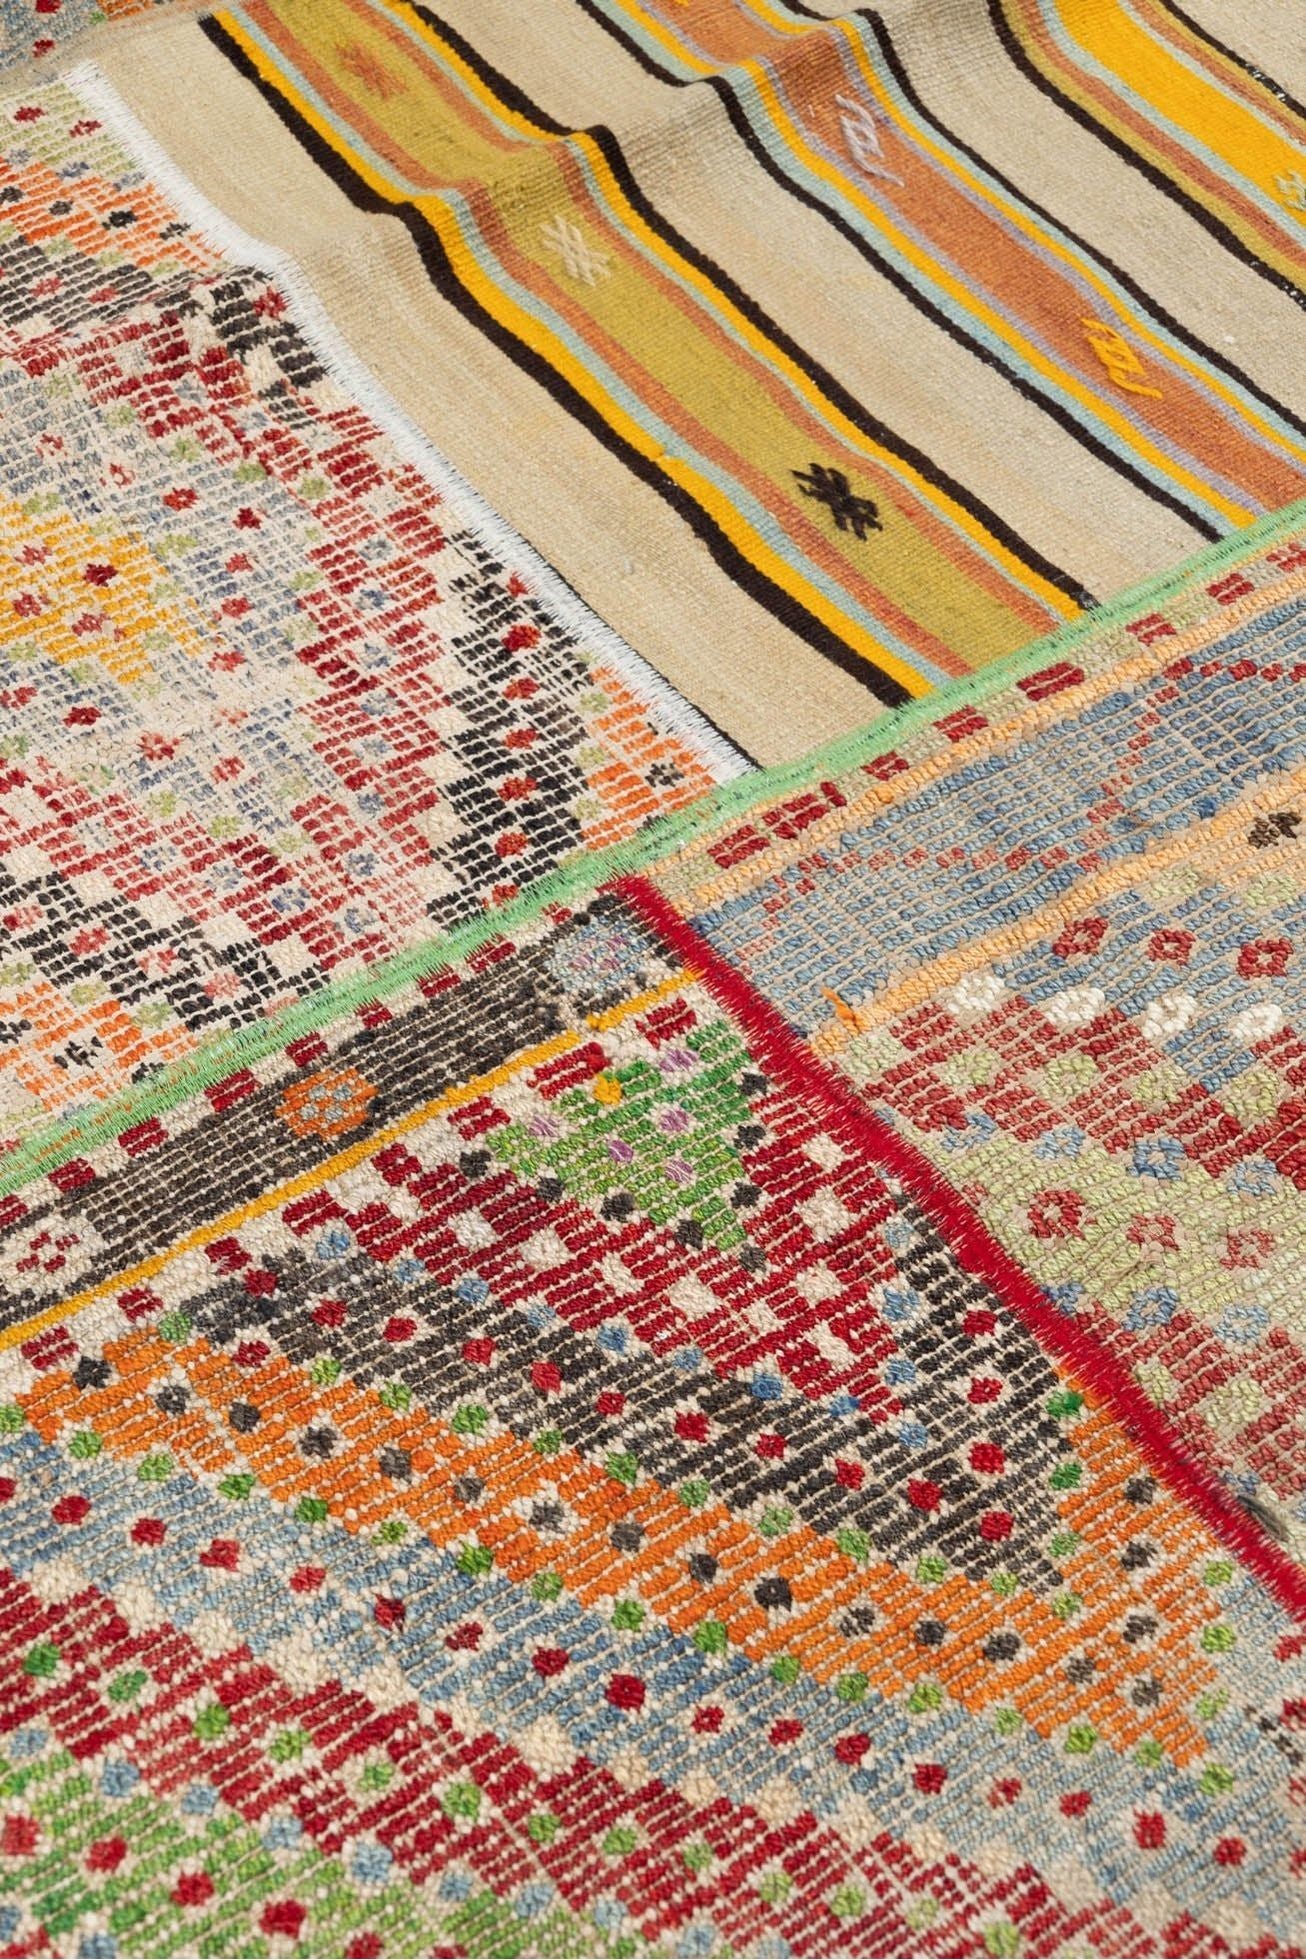 #Turkish_Carpets_Rugs# #Modern_Carpets# #Abrash_Carpets#Sr34-283X380